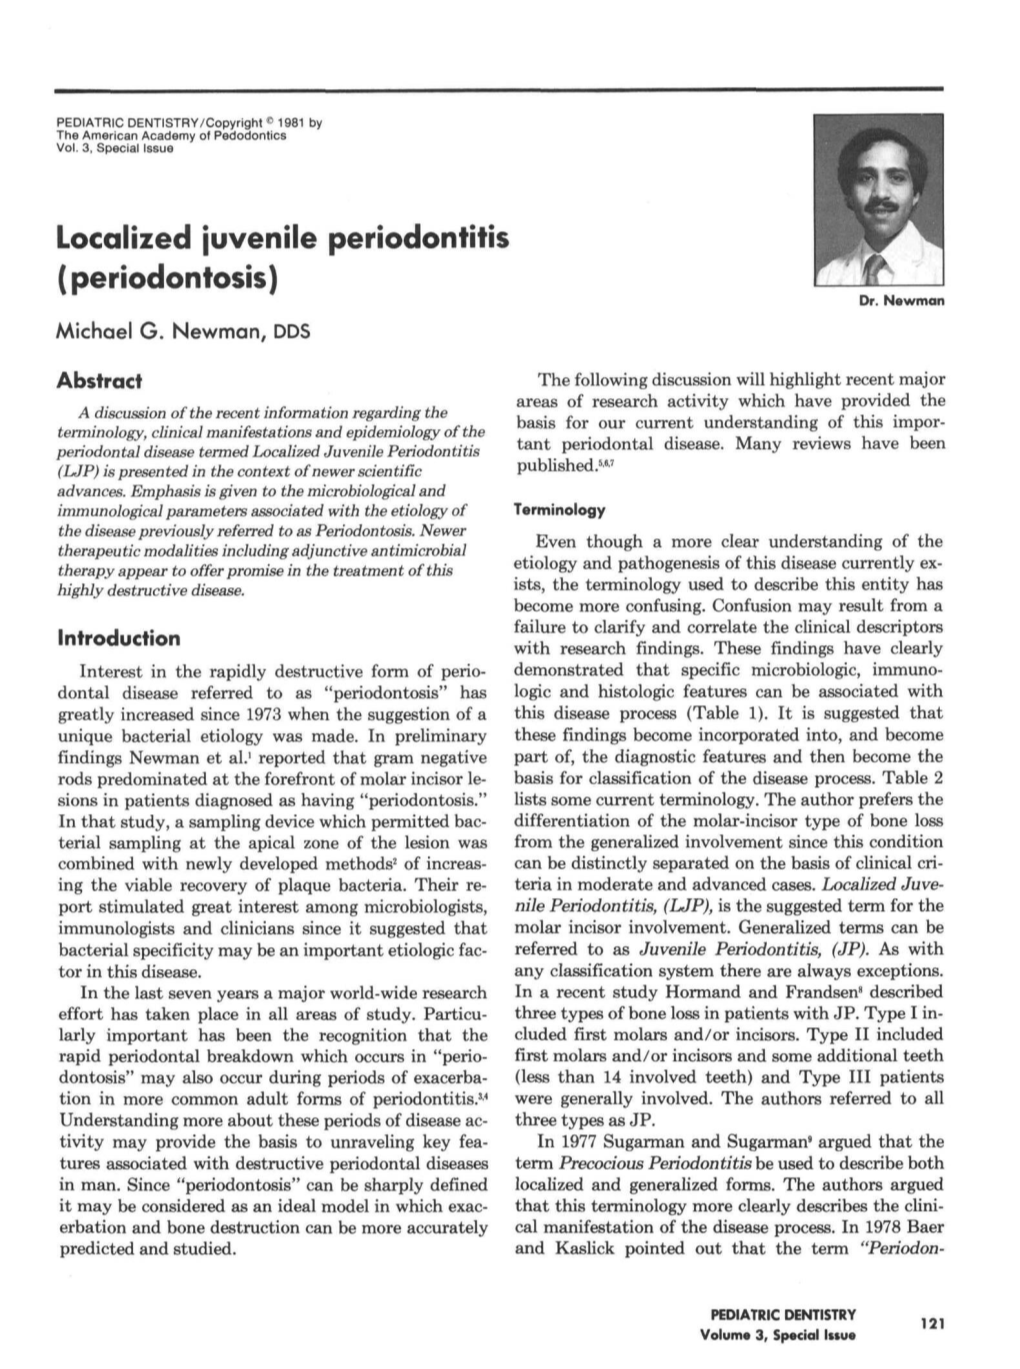 Localized Juvenile Periodontitis (Periodontosis) Dr